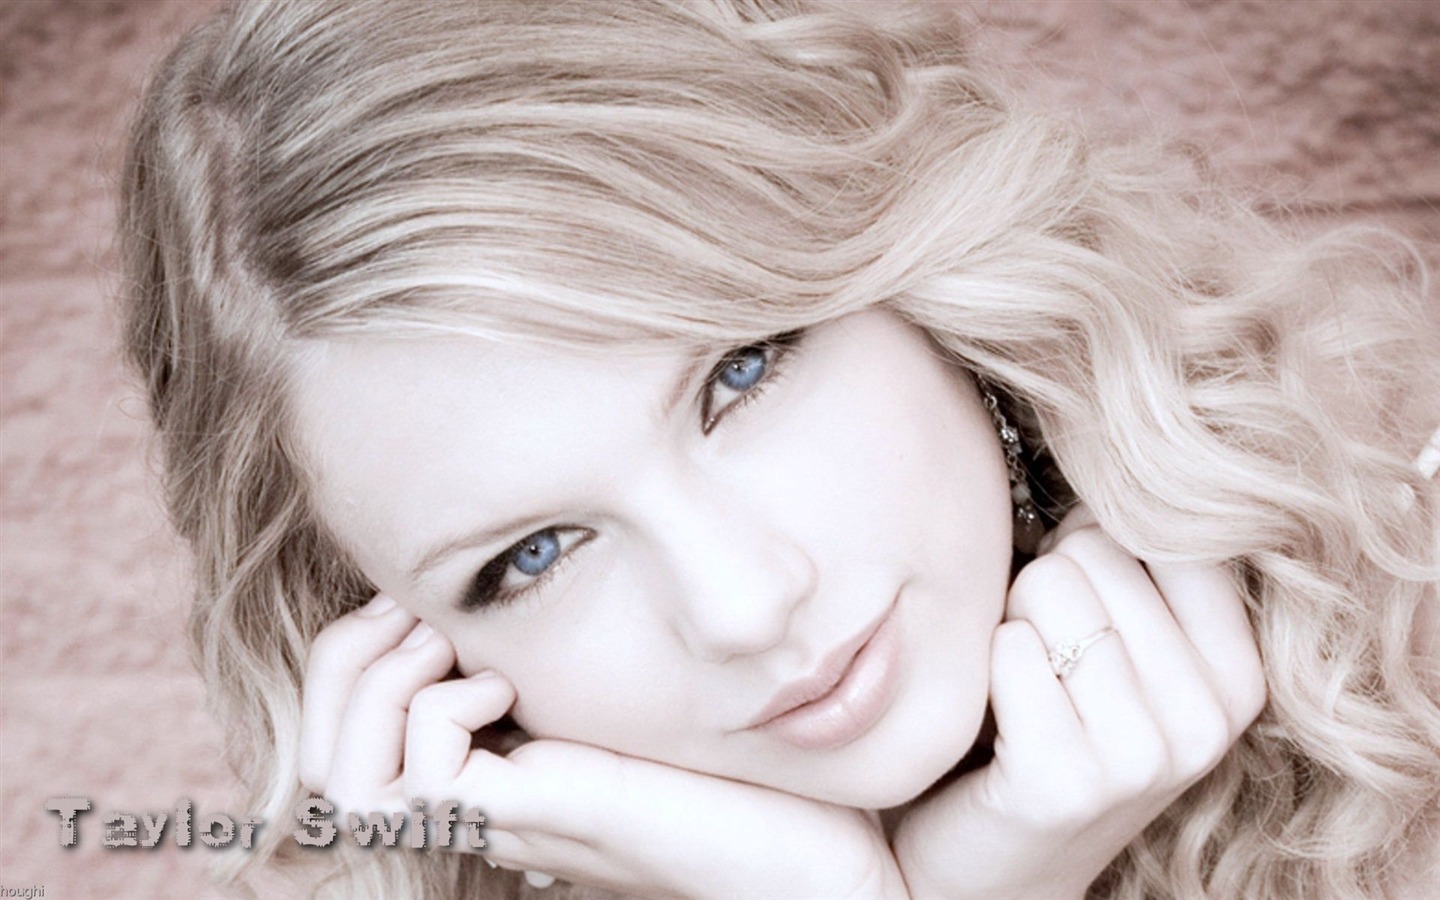 Taylor Swift 泰勒·斯威芙特 美女壁紙 #3 - 1440x900